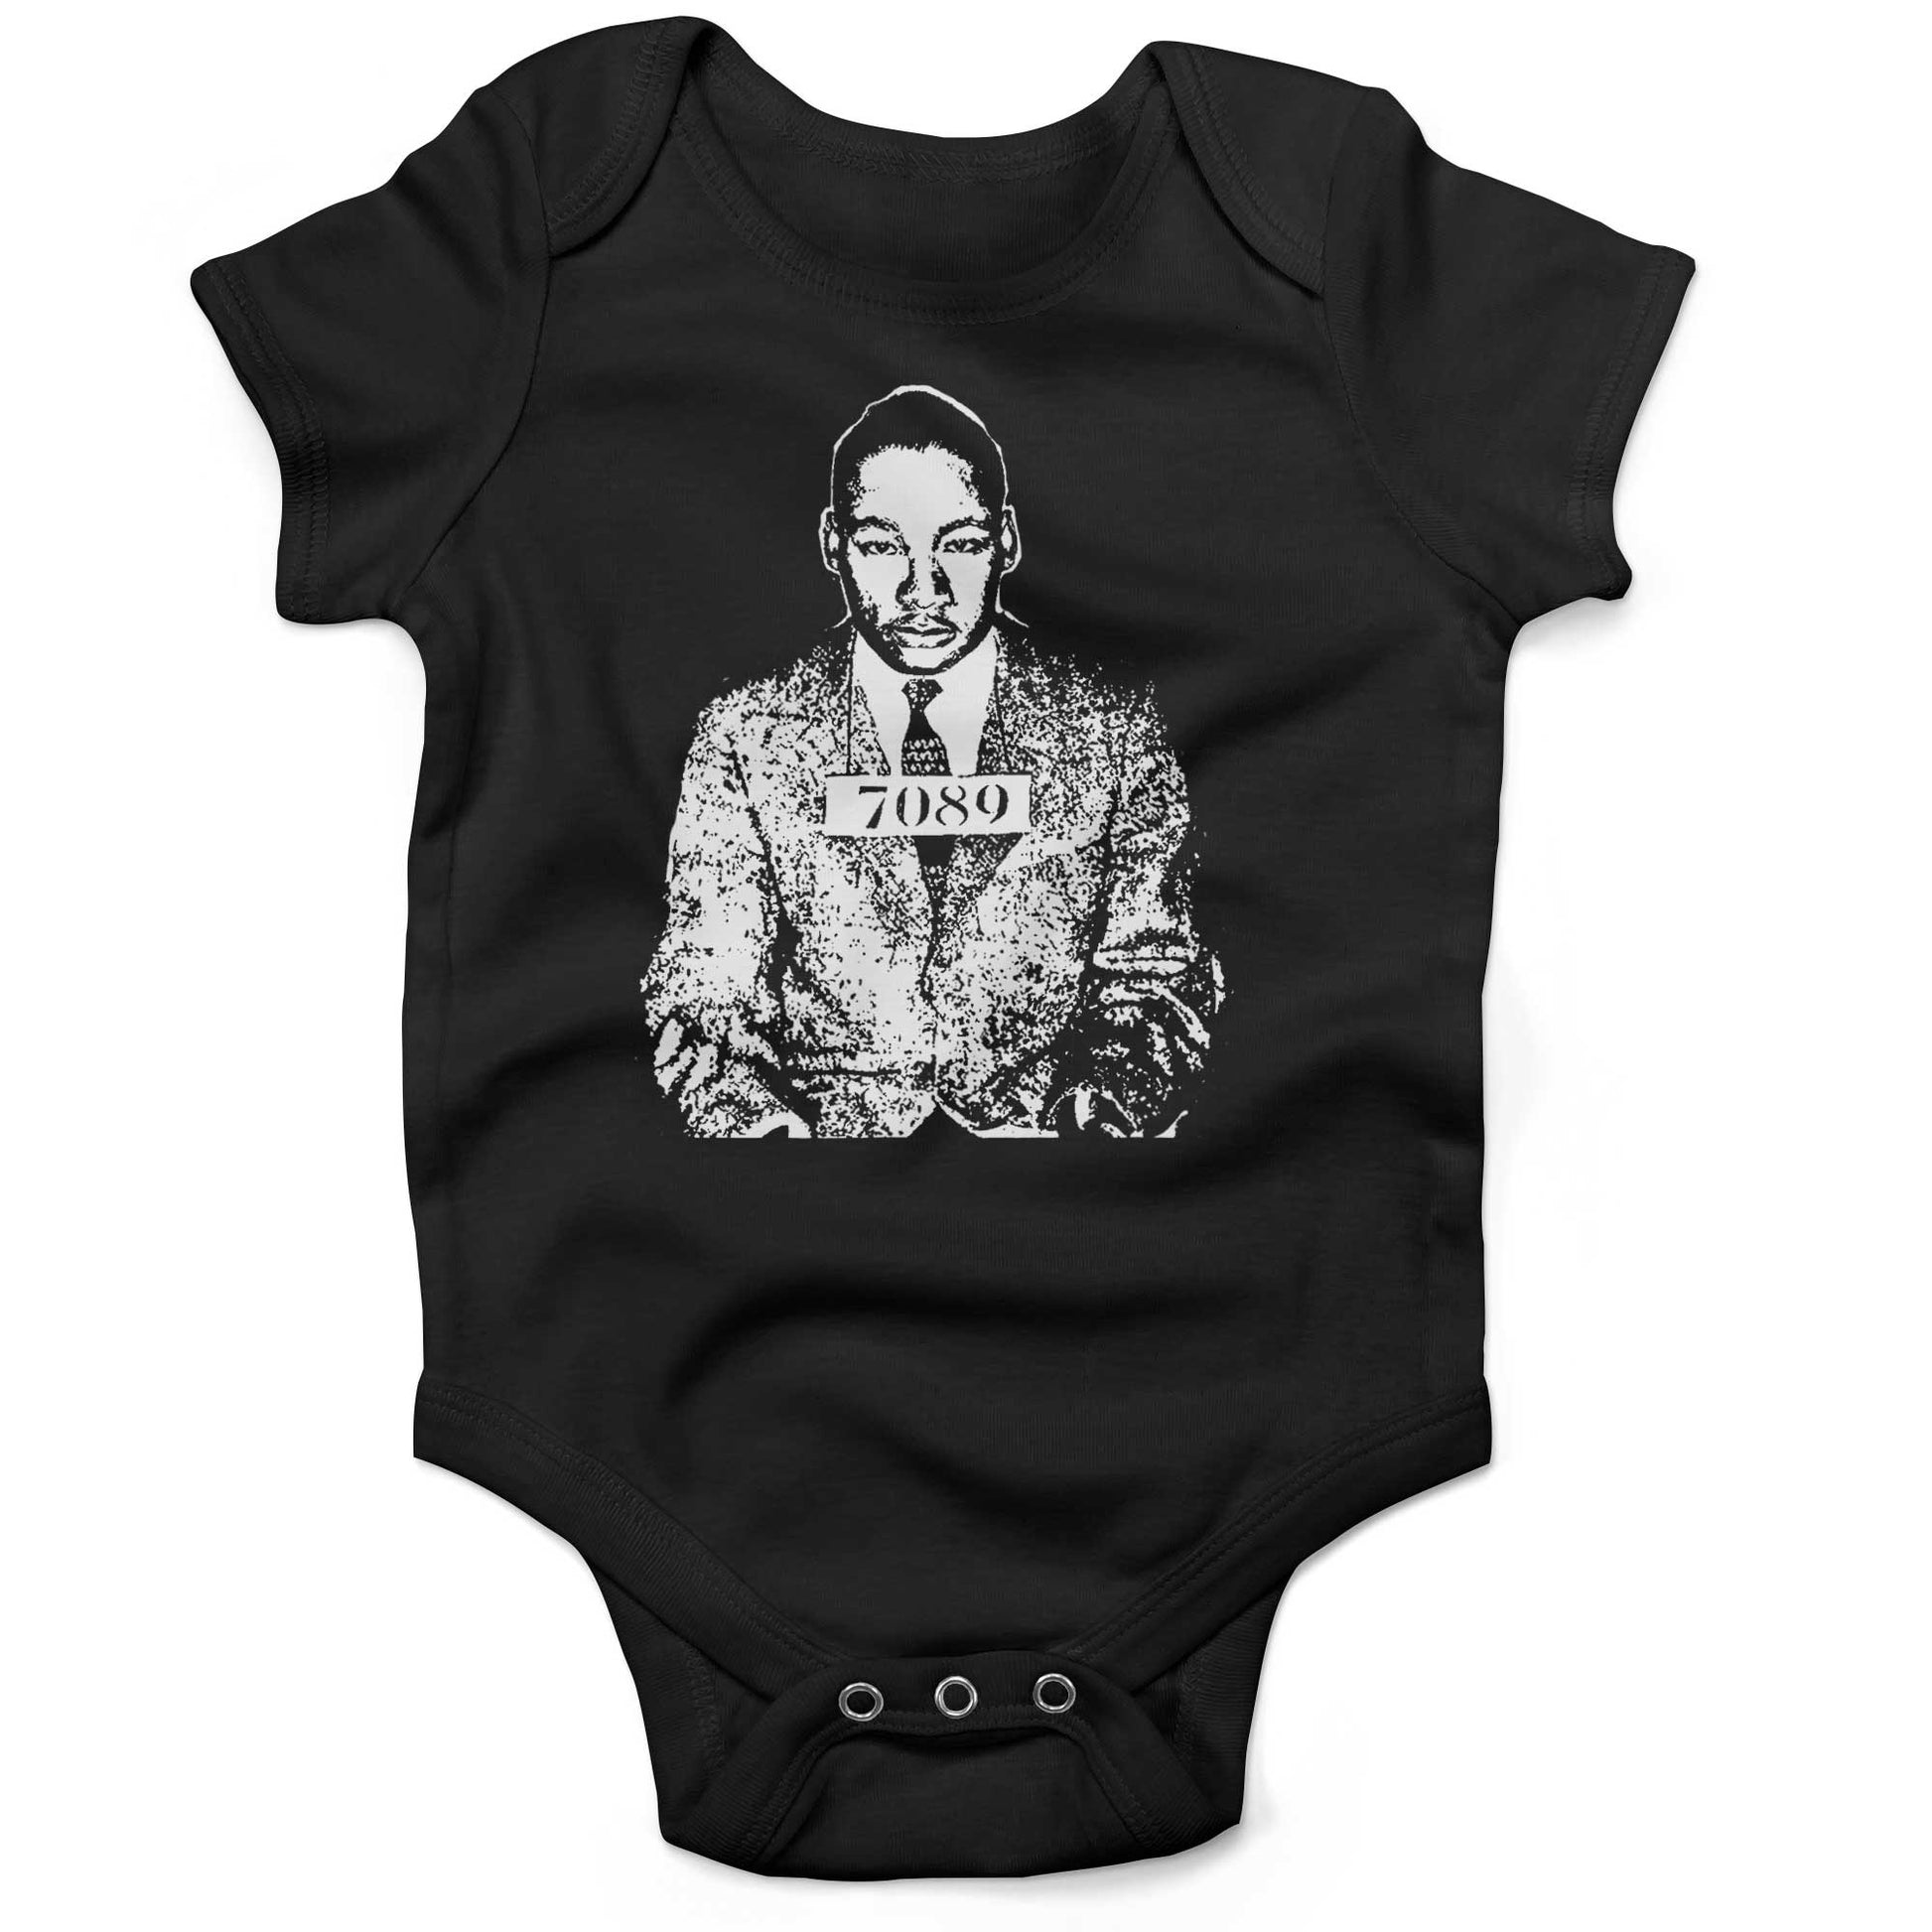 Martin Luther King Jr. Infant Bodysuit-Organic Black-3-6 months